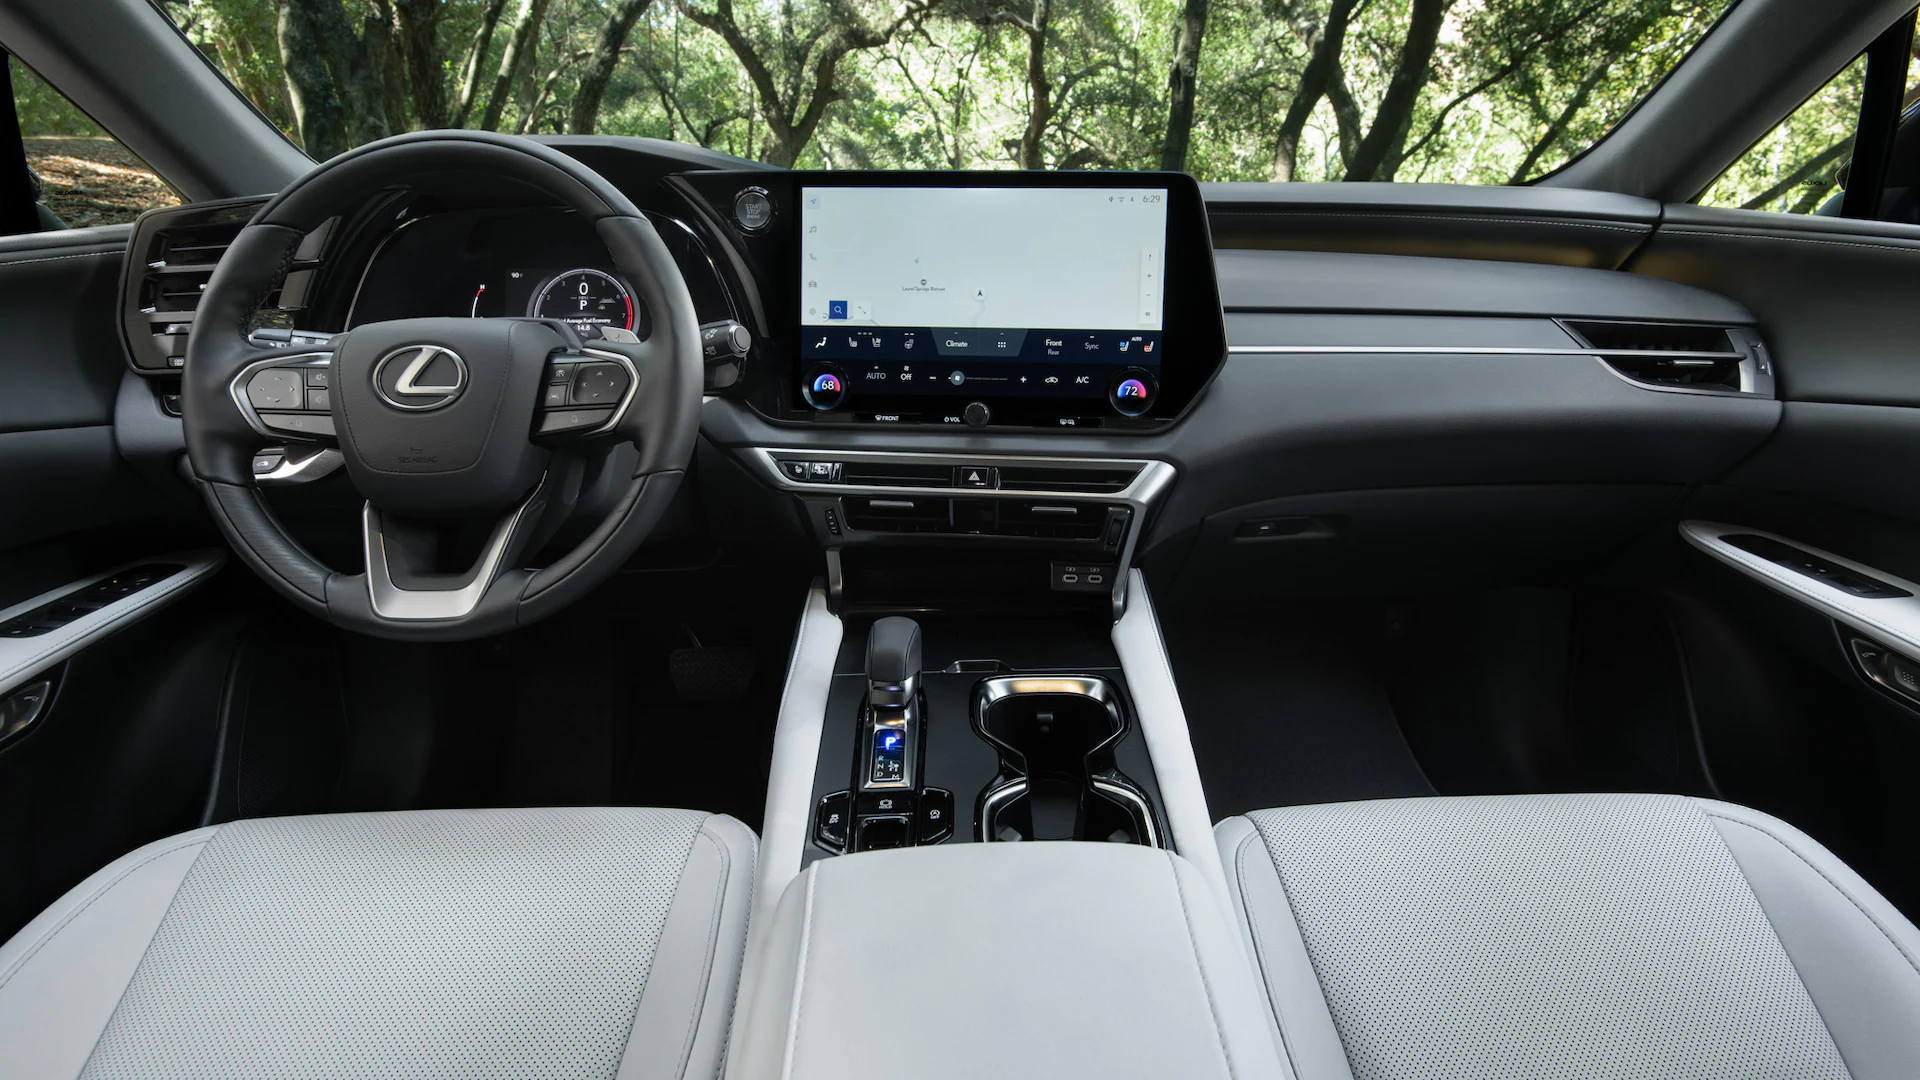 Lexus RX350 interior - Cockpit